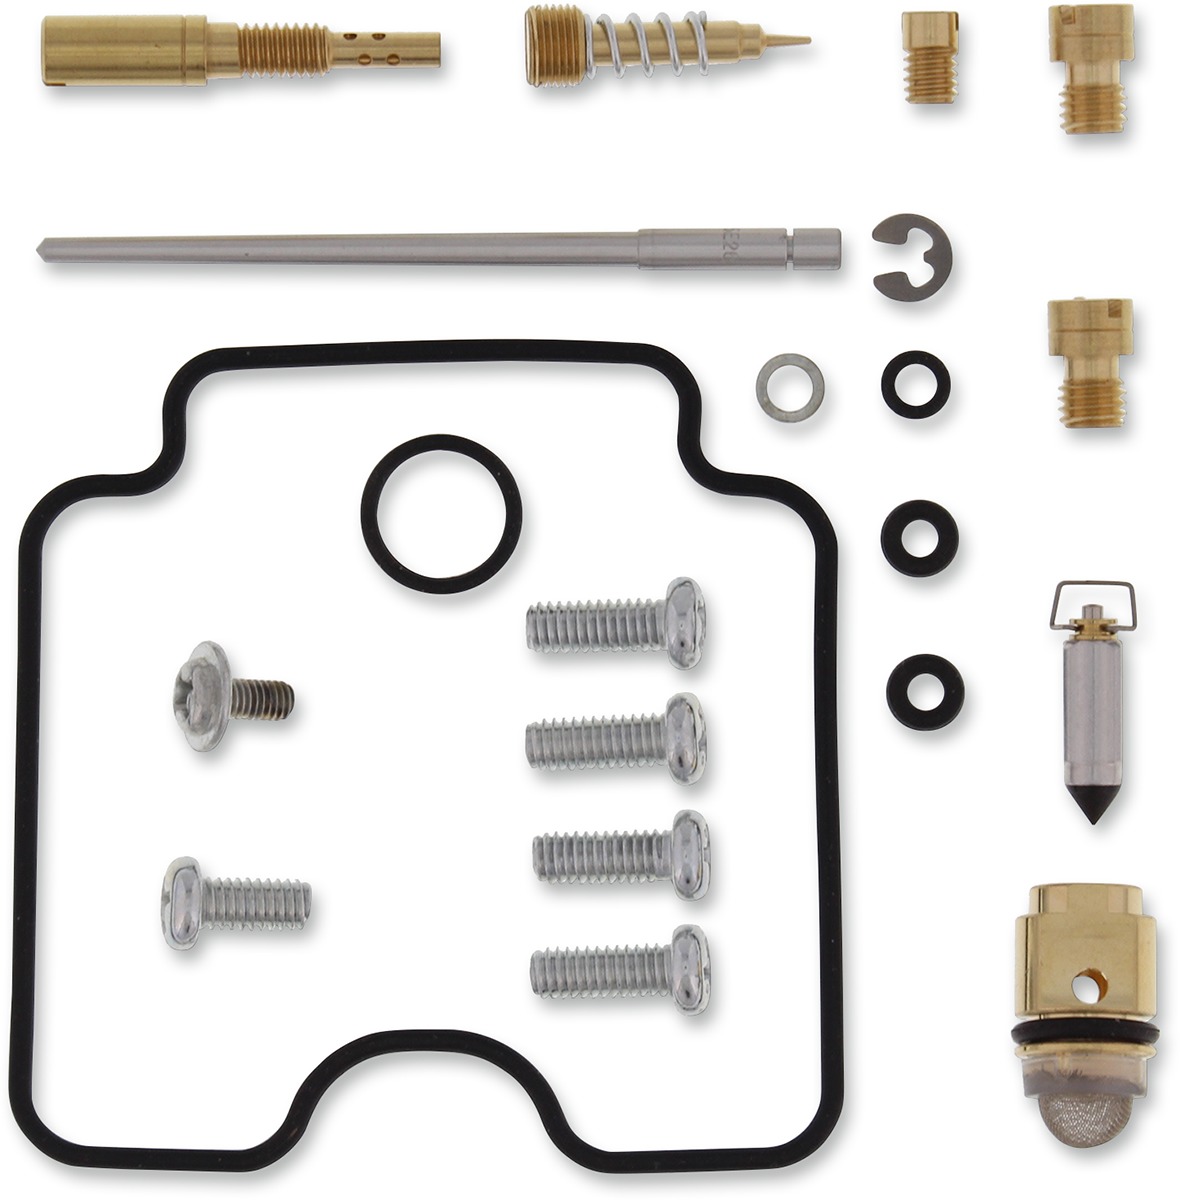 ATV Carburetor Repair Kit - For DVX KFX LTZ 400 - Click Image to Close